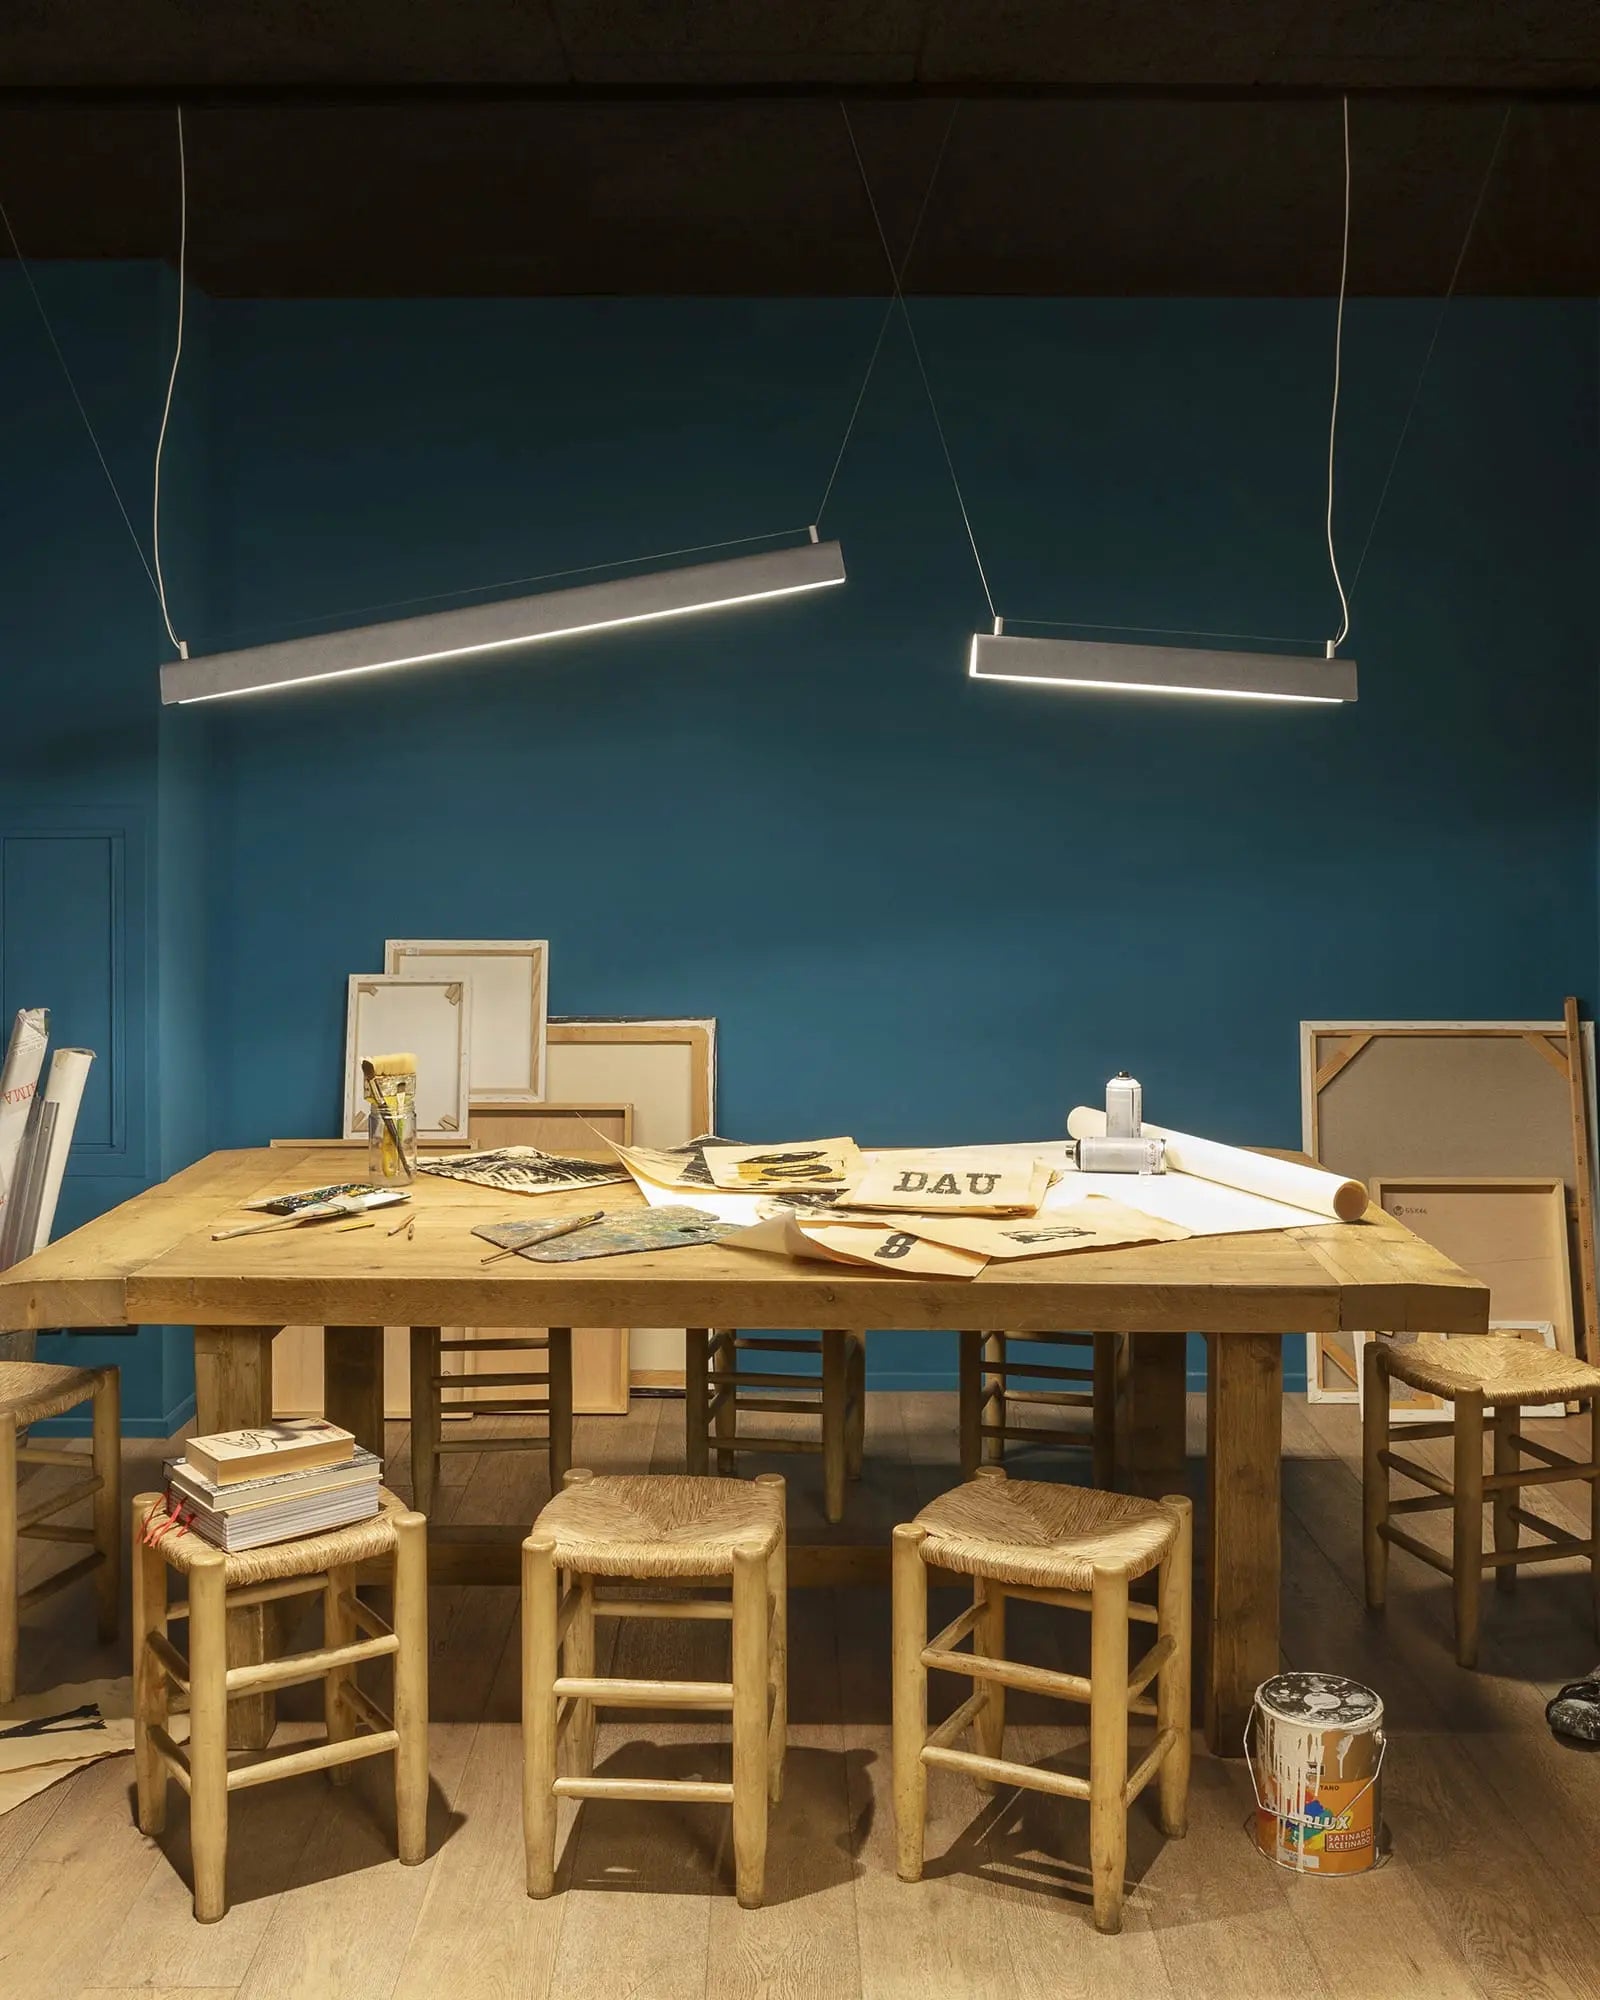 Gada Pendant light by Estiluz Lighting above a table